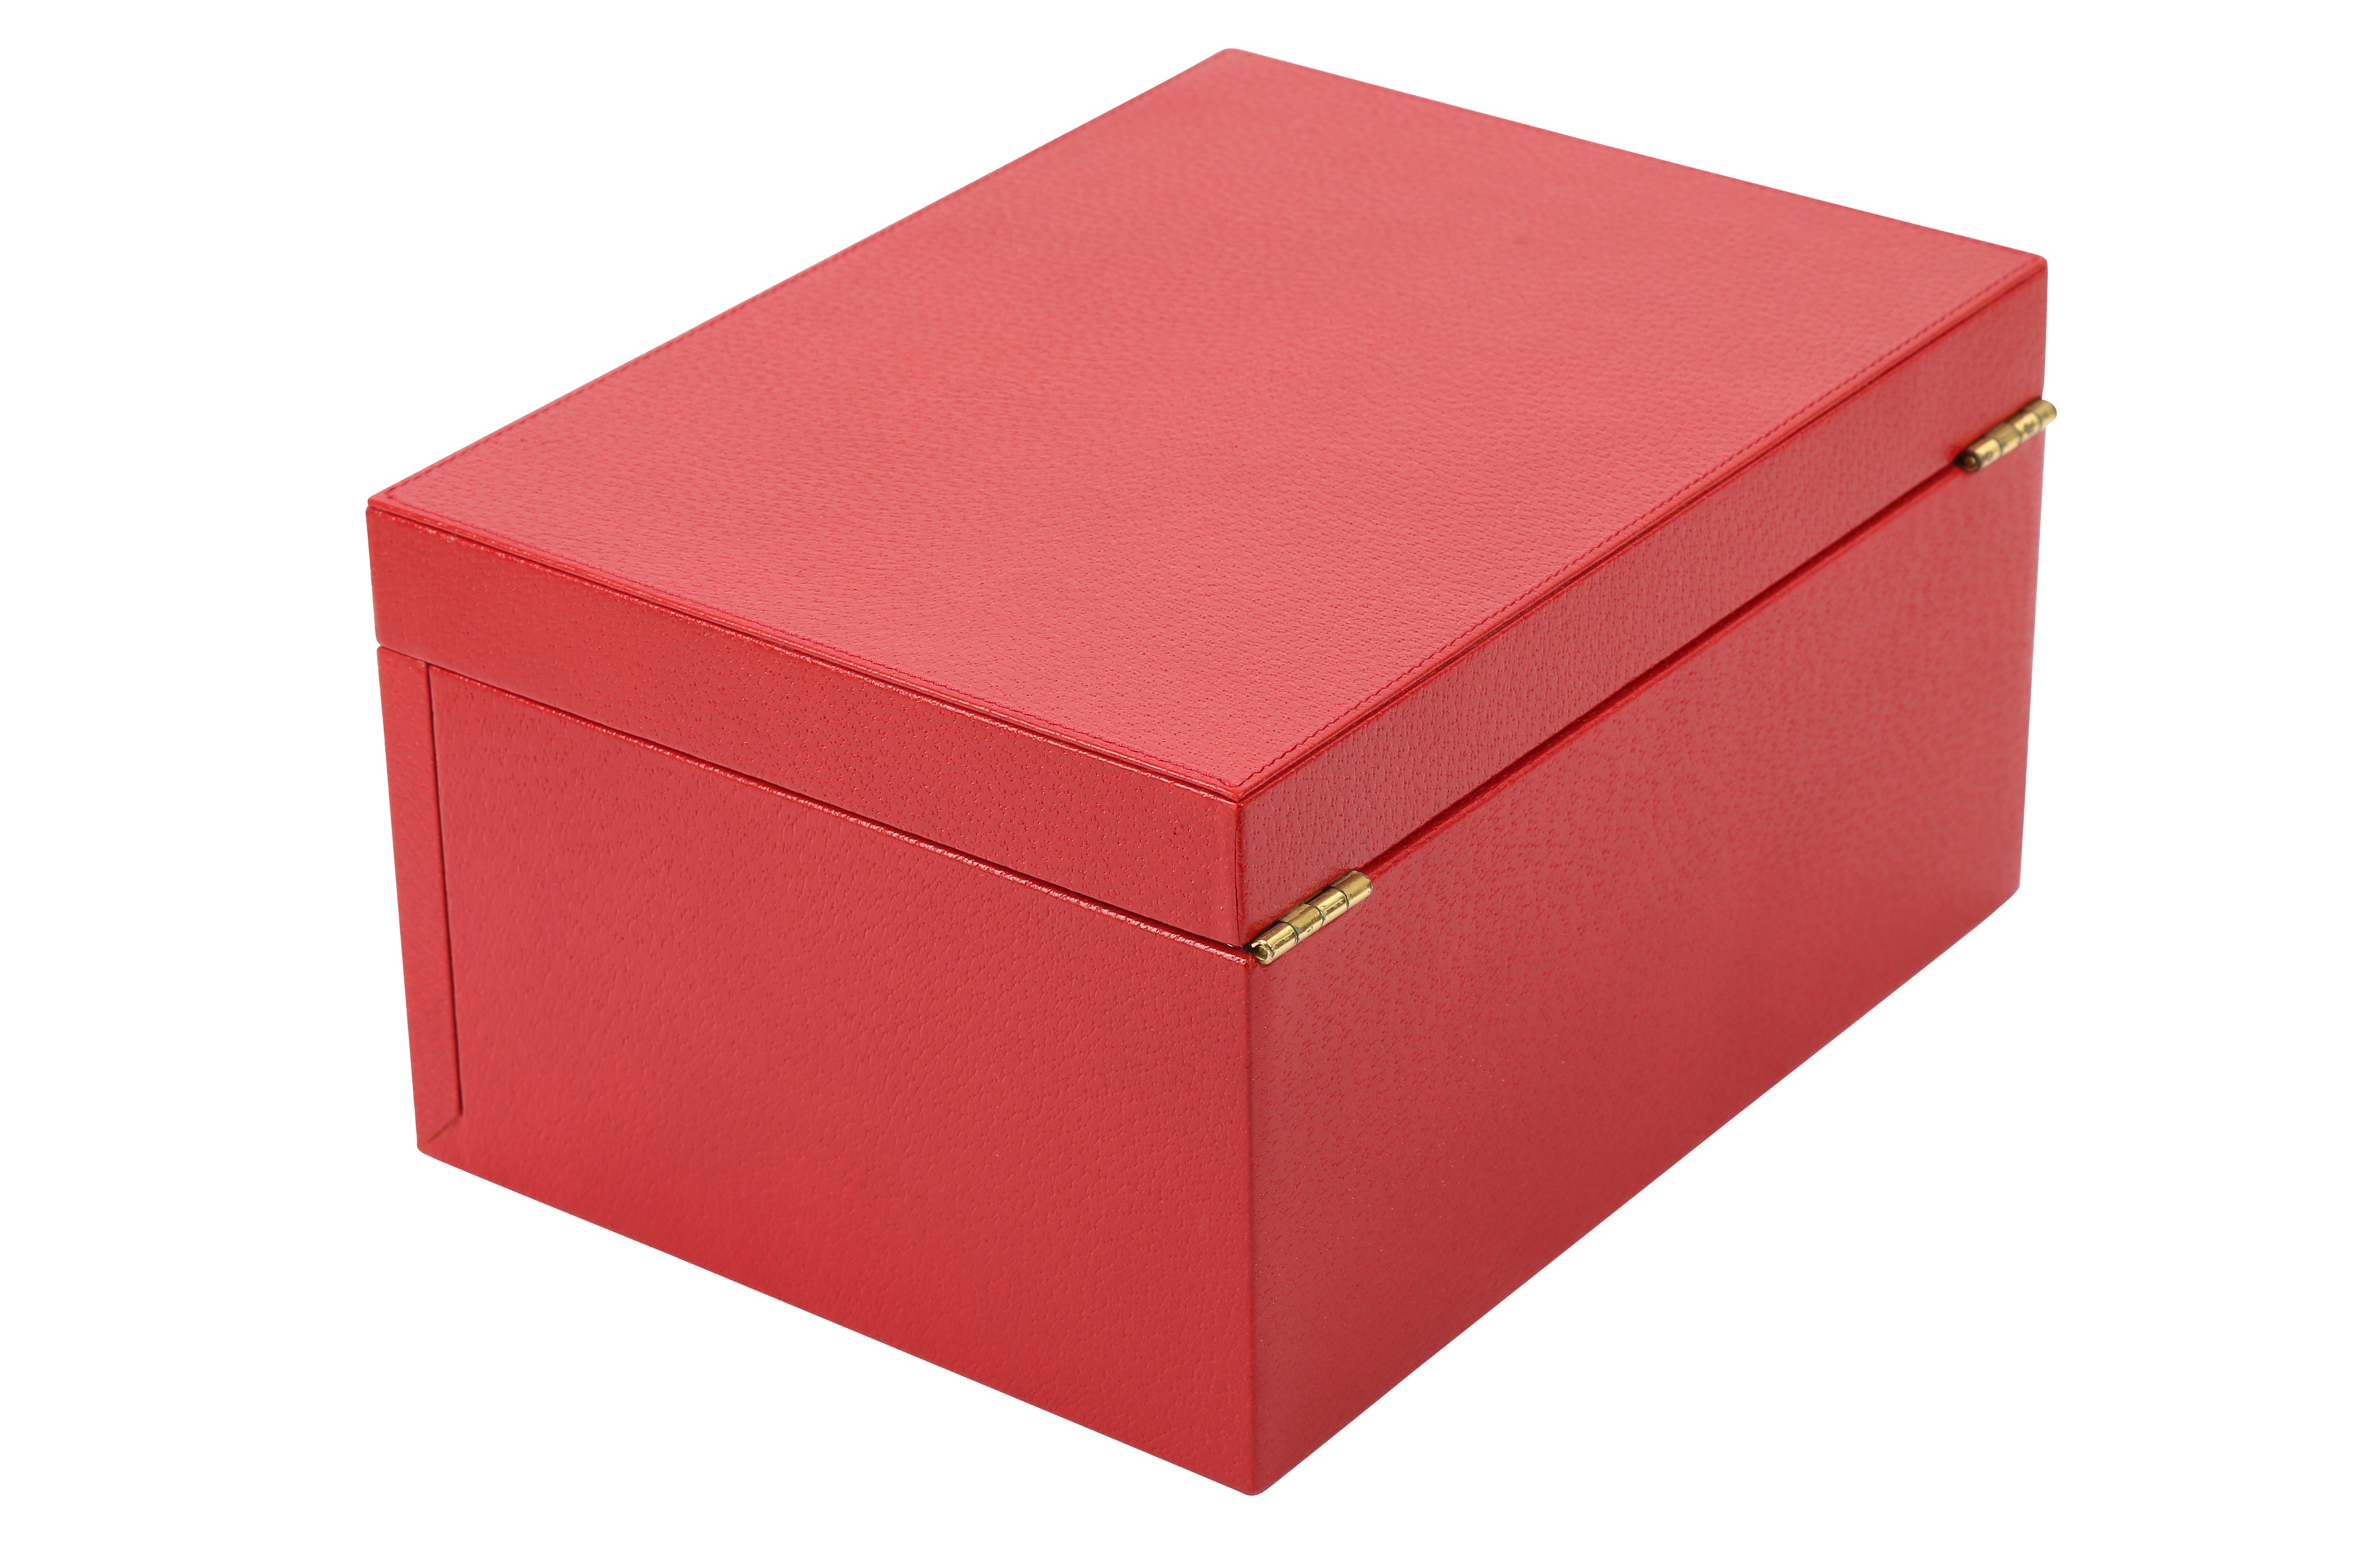 Smythson Red Jewellery Box - Image 6 of 10